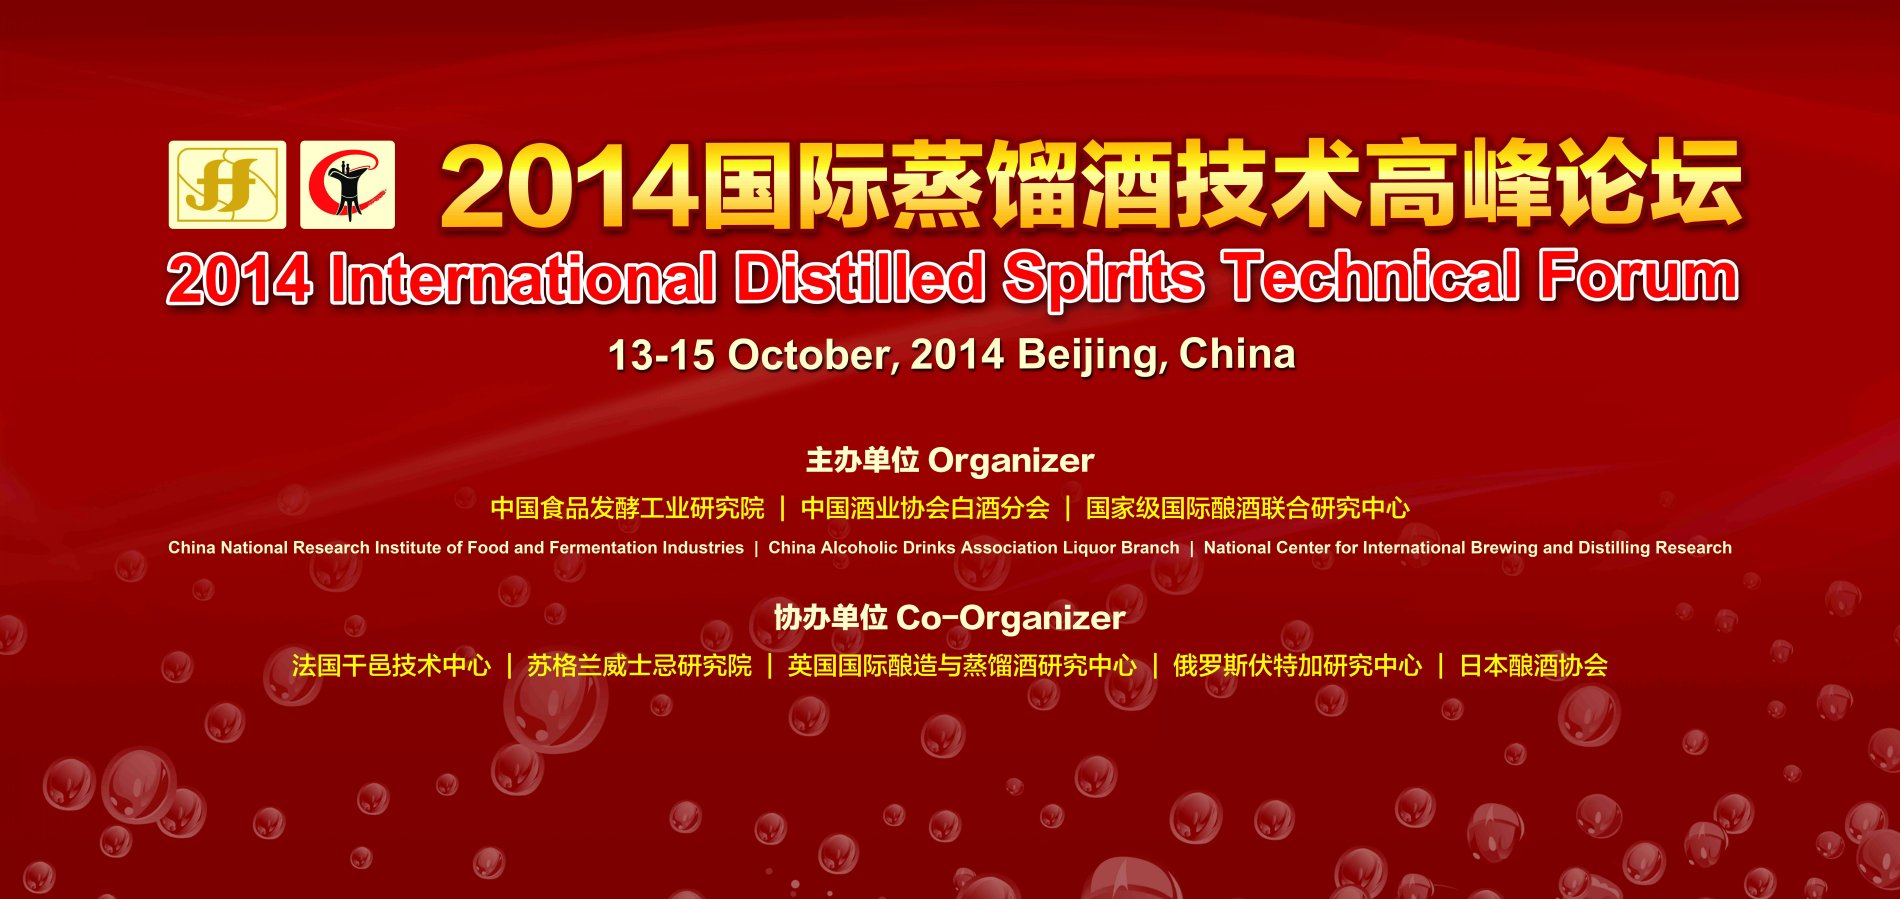 The First International Distilled Spirits Technical Forum (IDSTF)2014